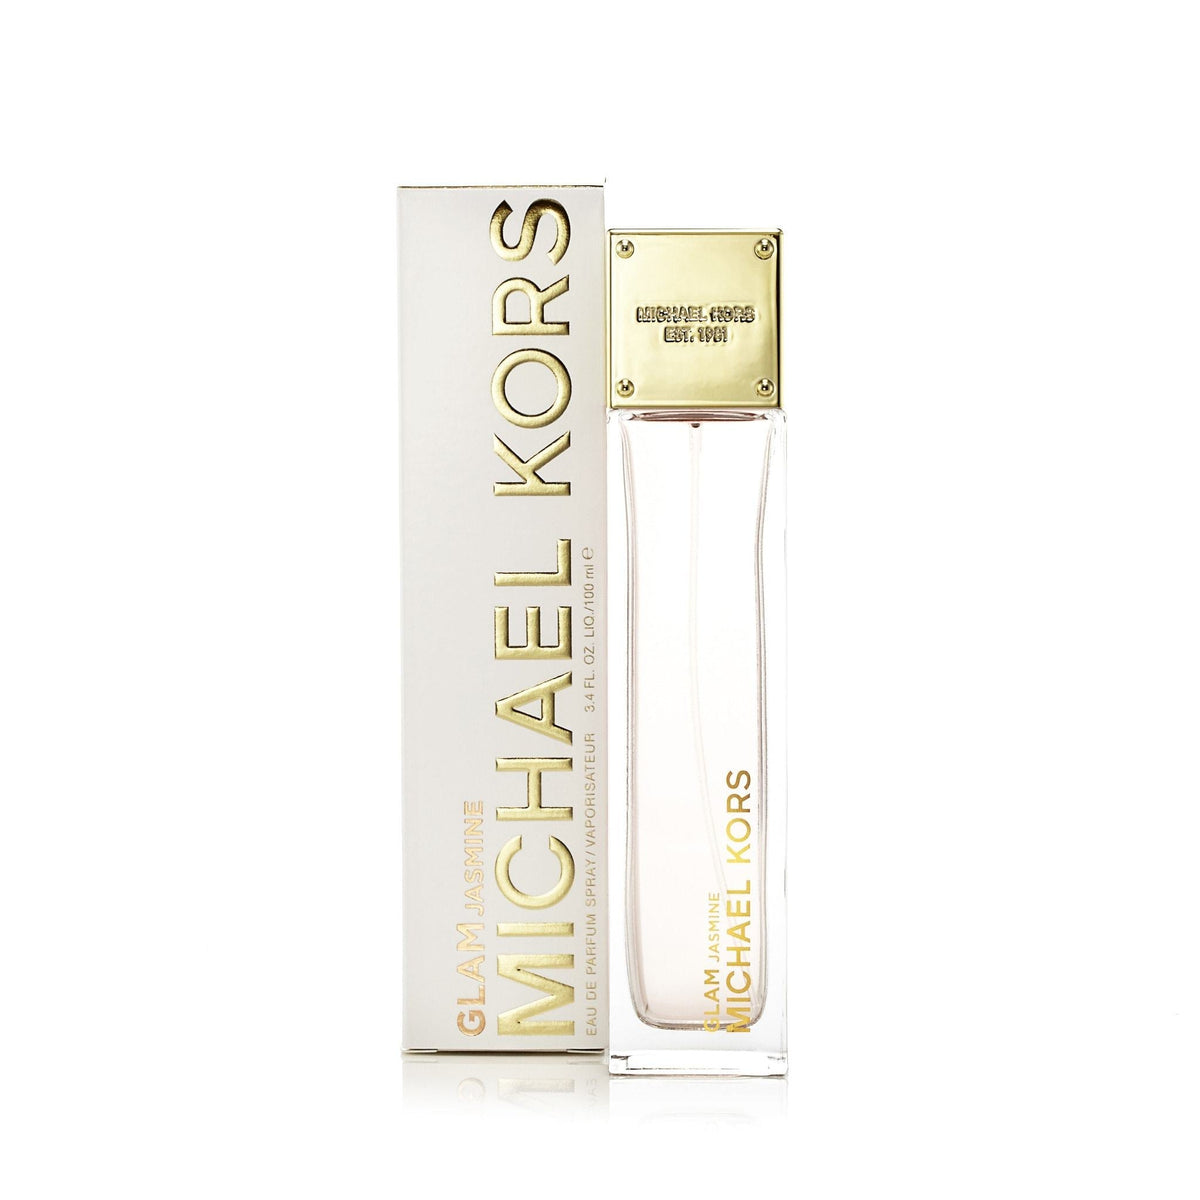 Glam Jasmine Eau de Parfum Spray for Women by Michael Kors 3.4 oz.